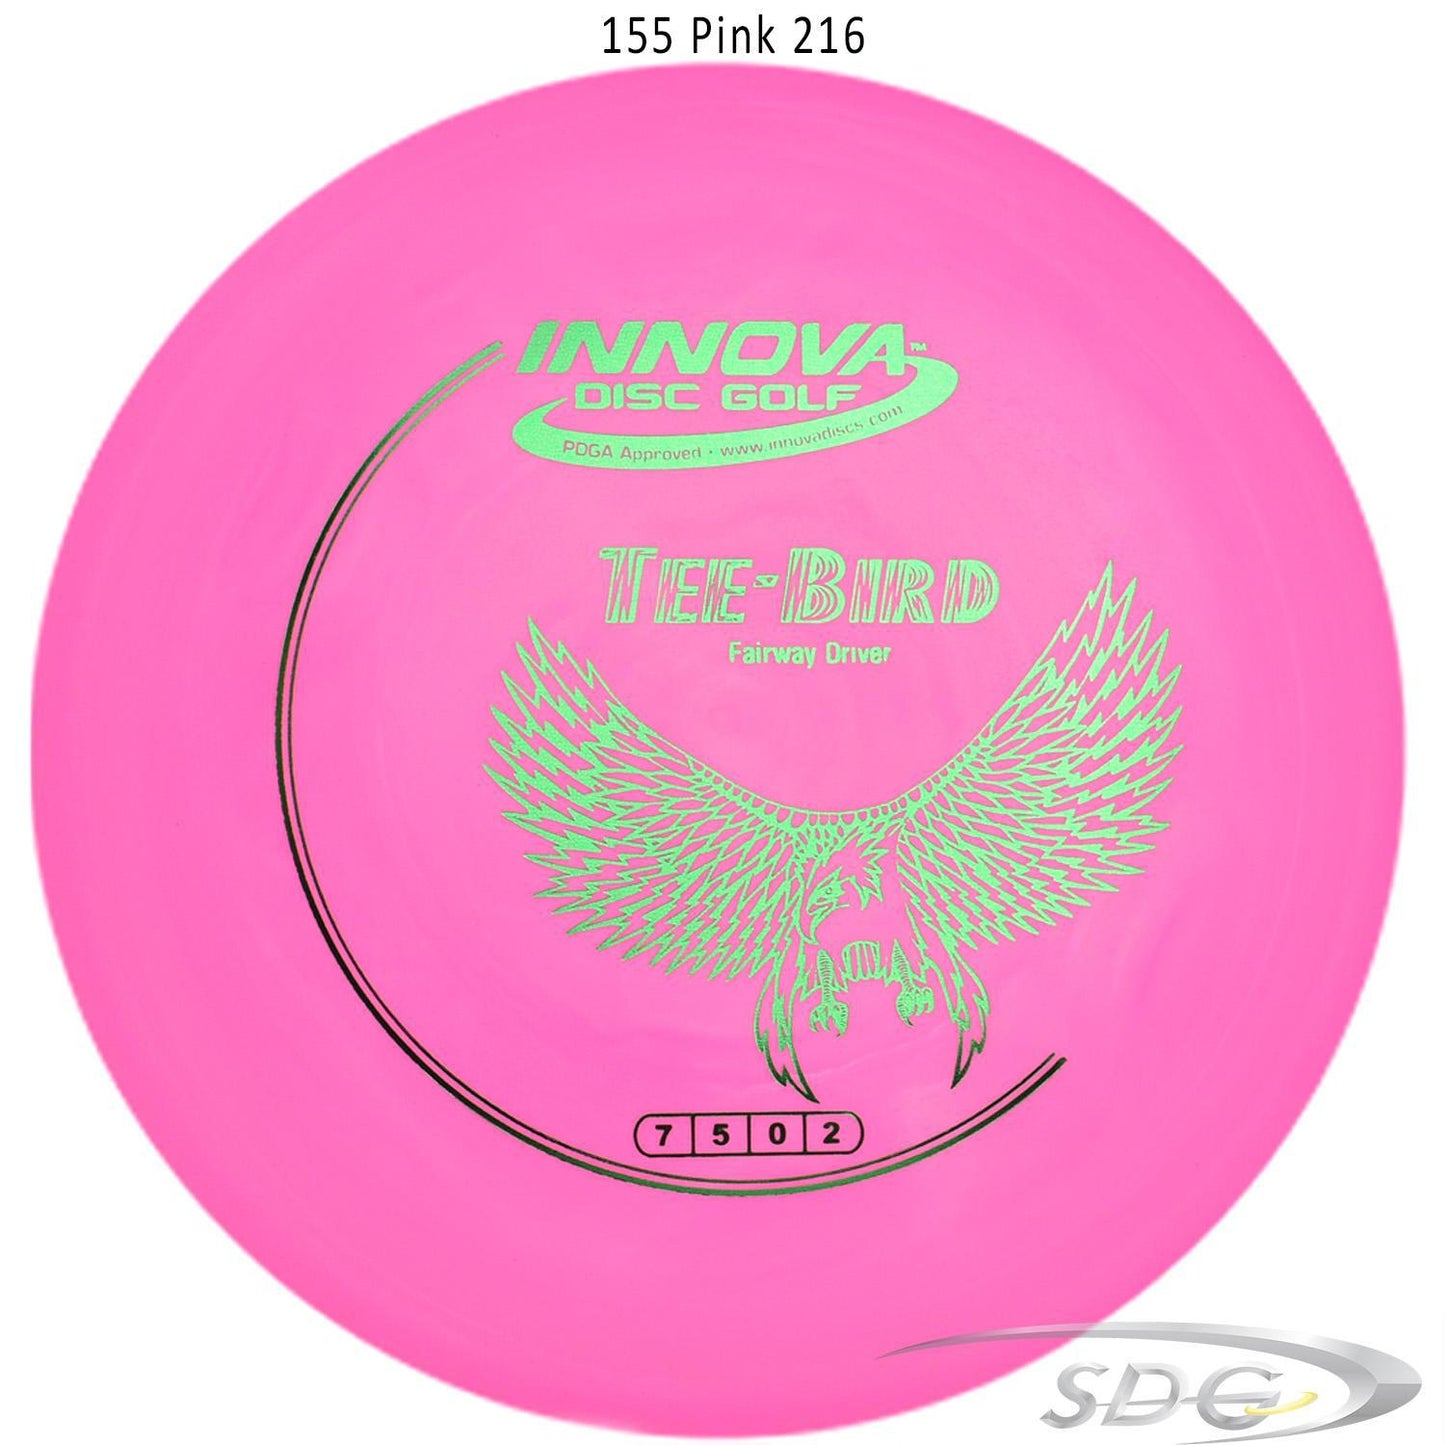 innova-dx-teebird-disc-golf-fairway-driver 155 Pink 216 